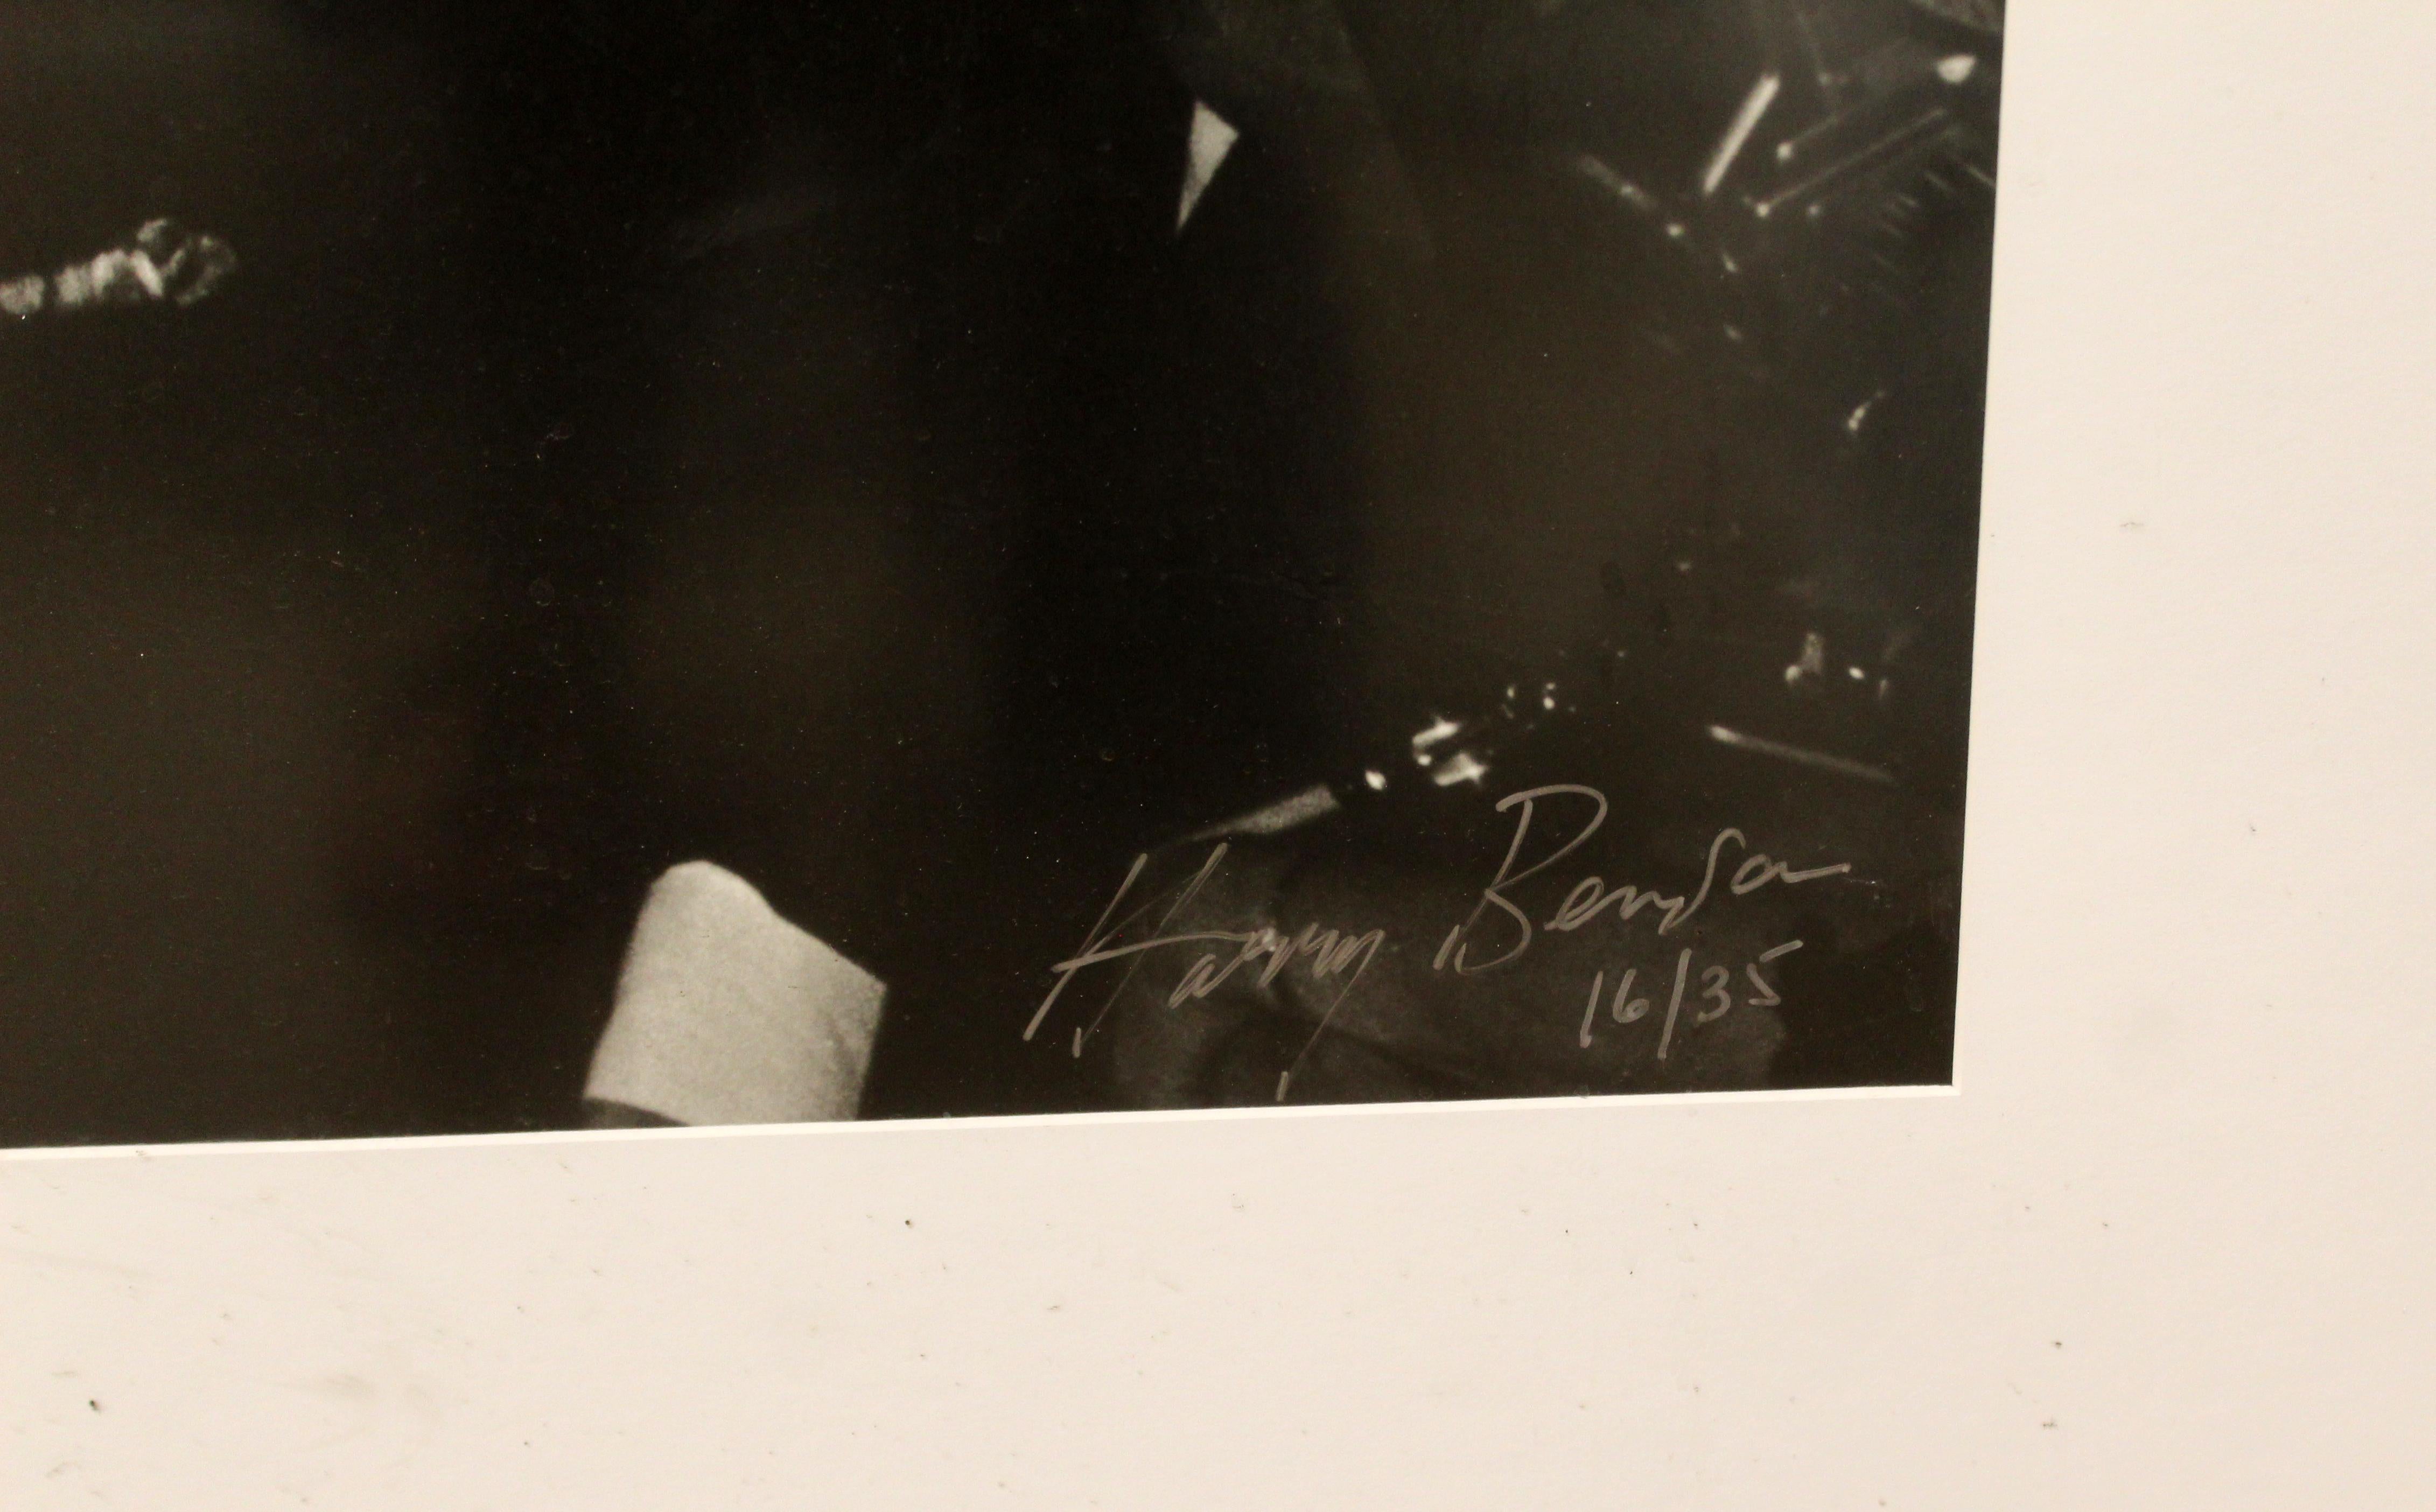 Mid-20th Century Mid-Century Modern Framed Photograph Frank & Mia Signed by Harry Benson, 1966